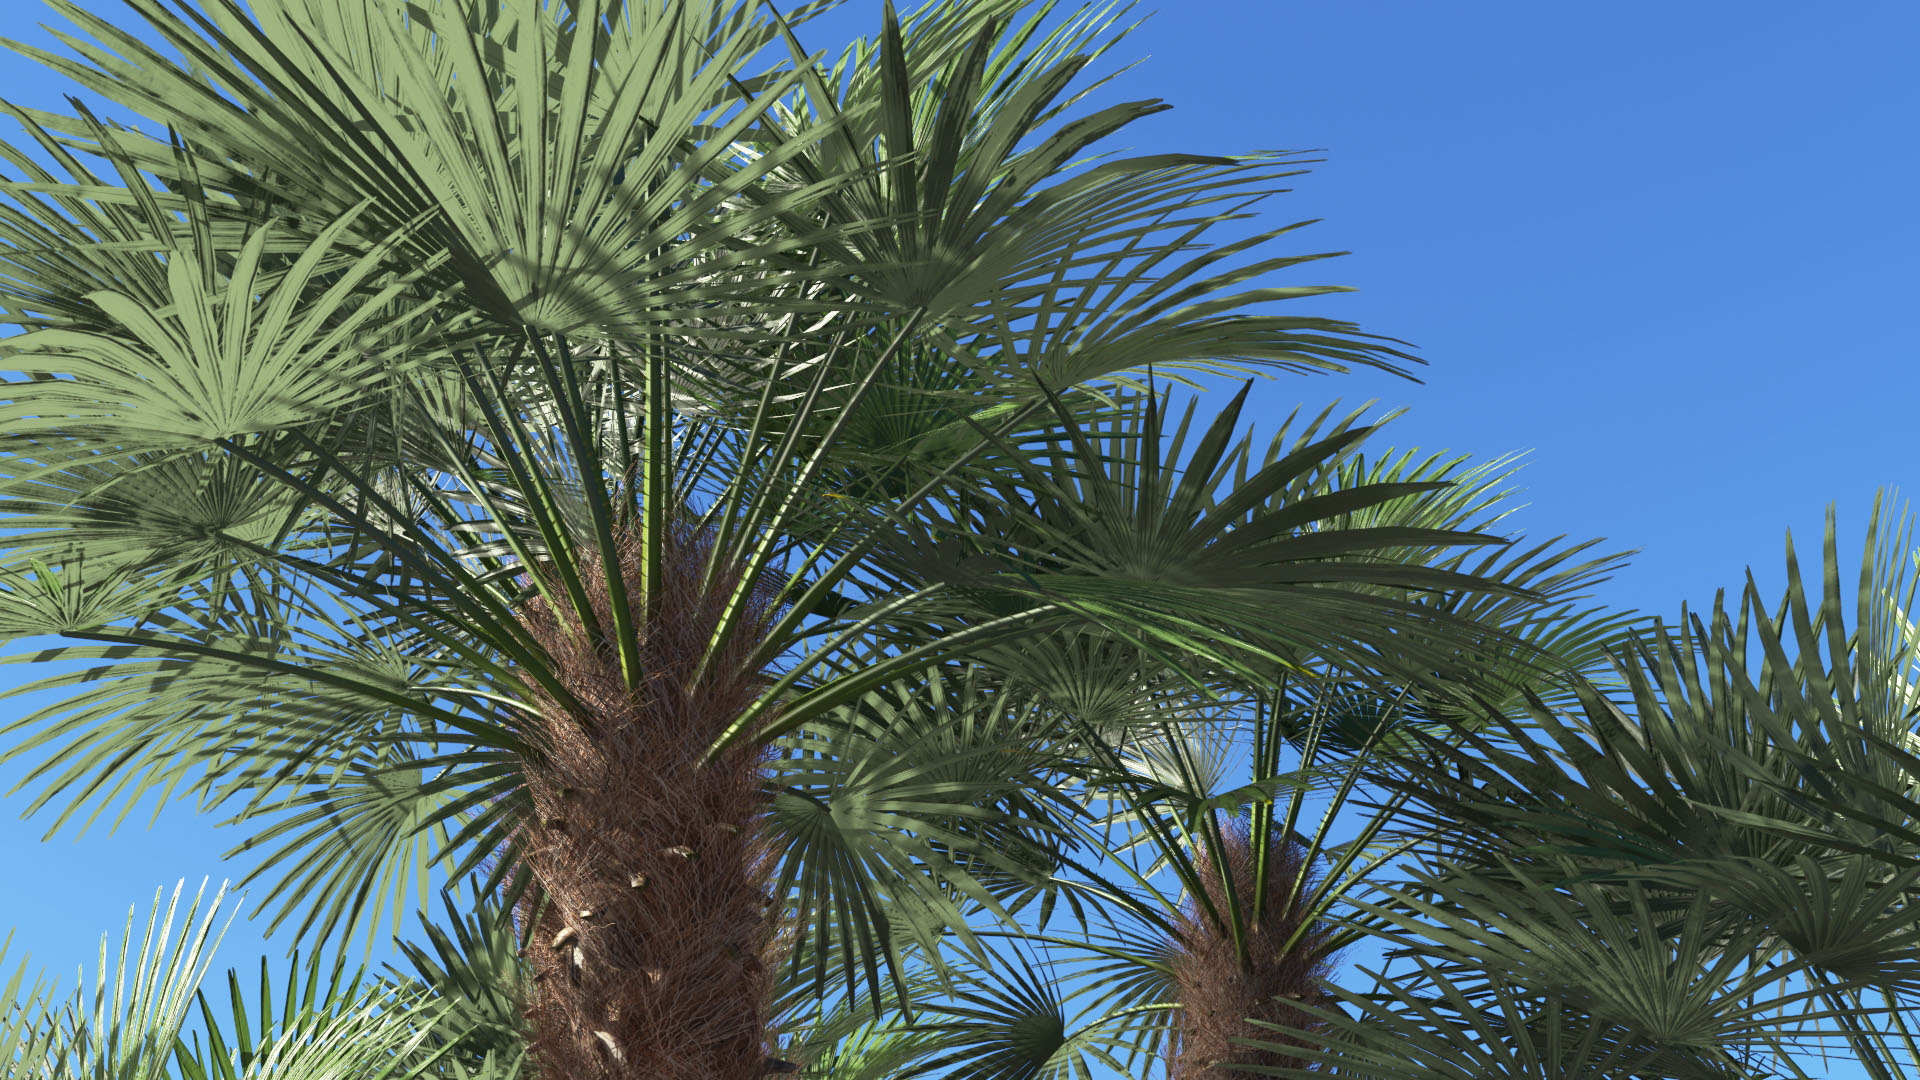 3D model of the Mediterranean fan palm Chamaerops humilis close-up